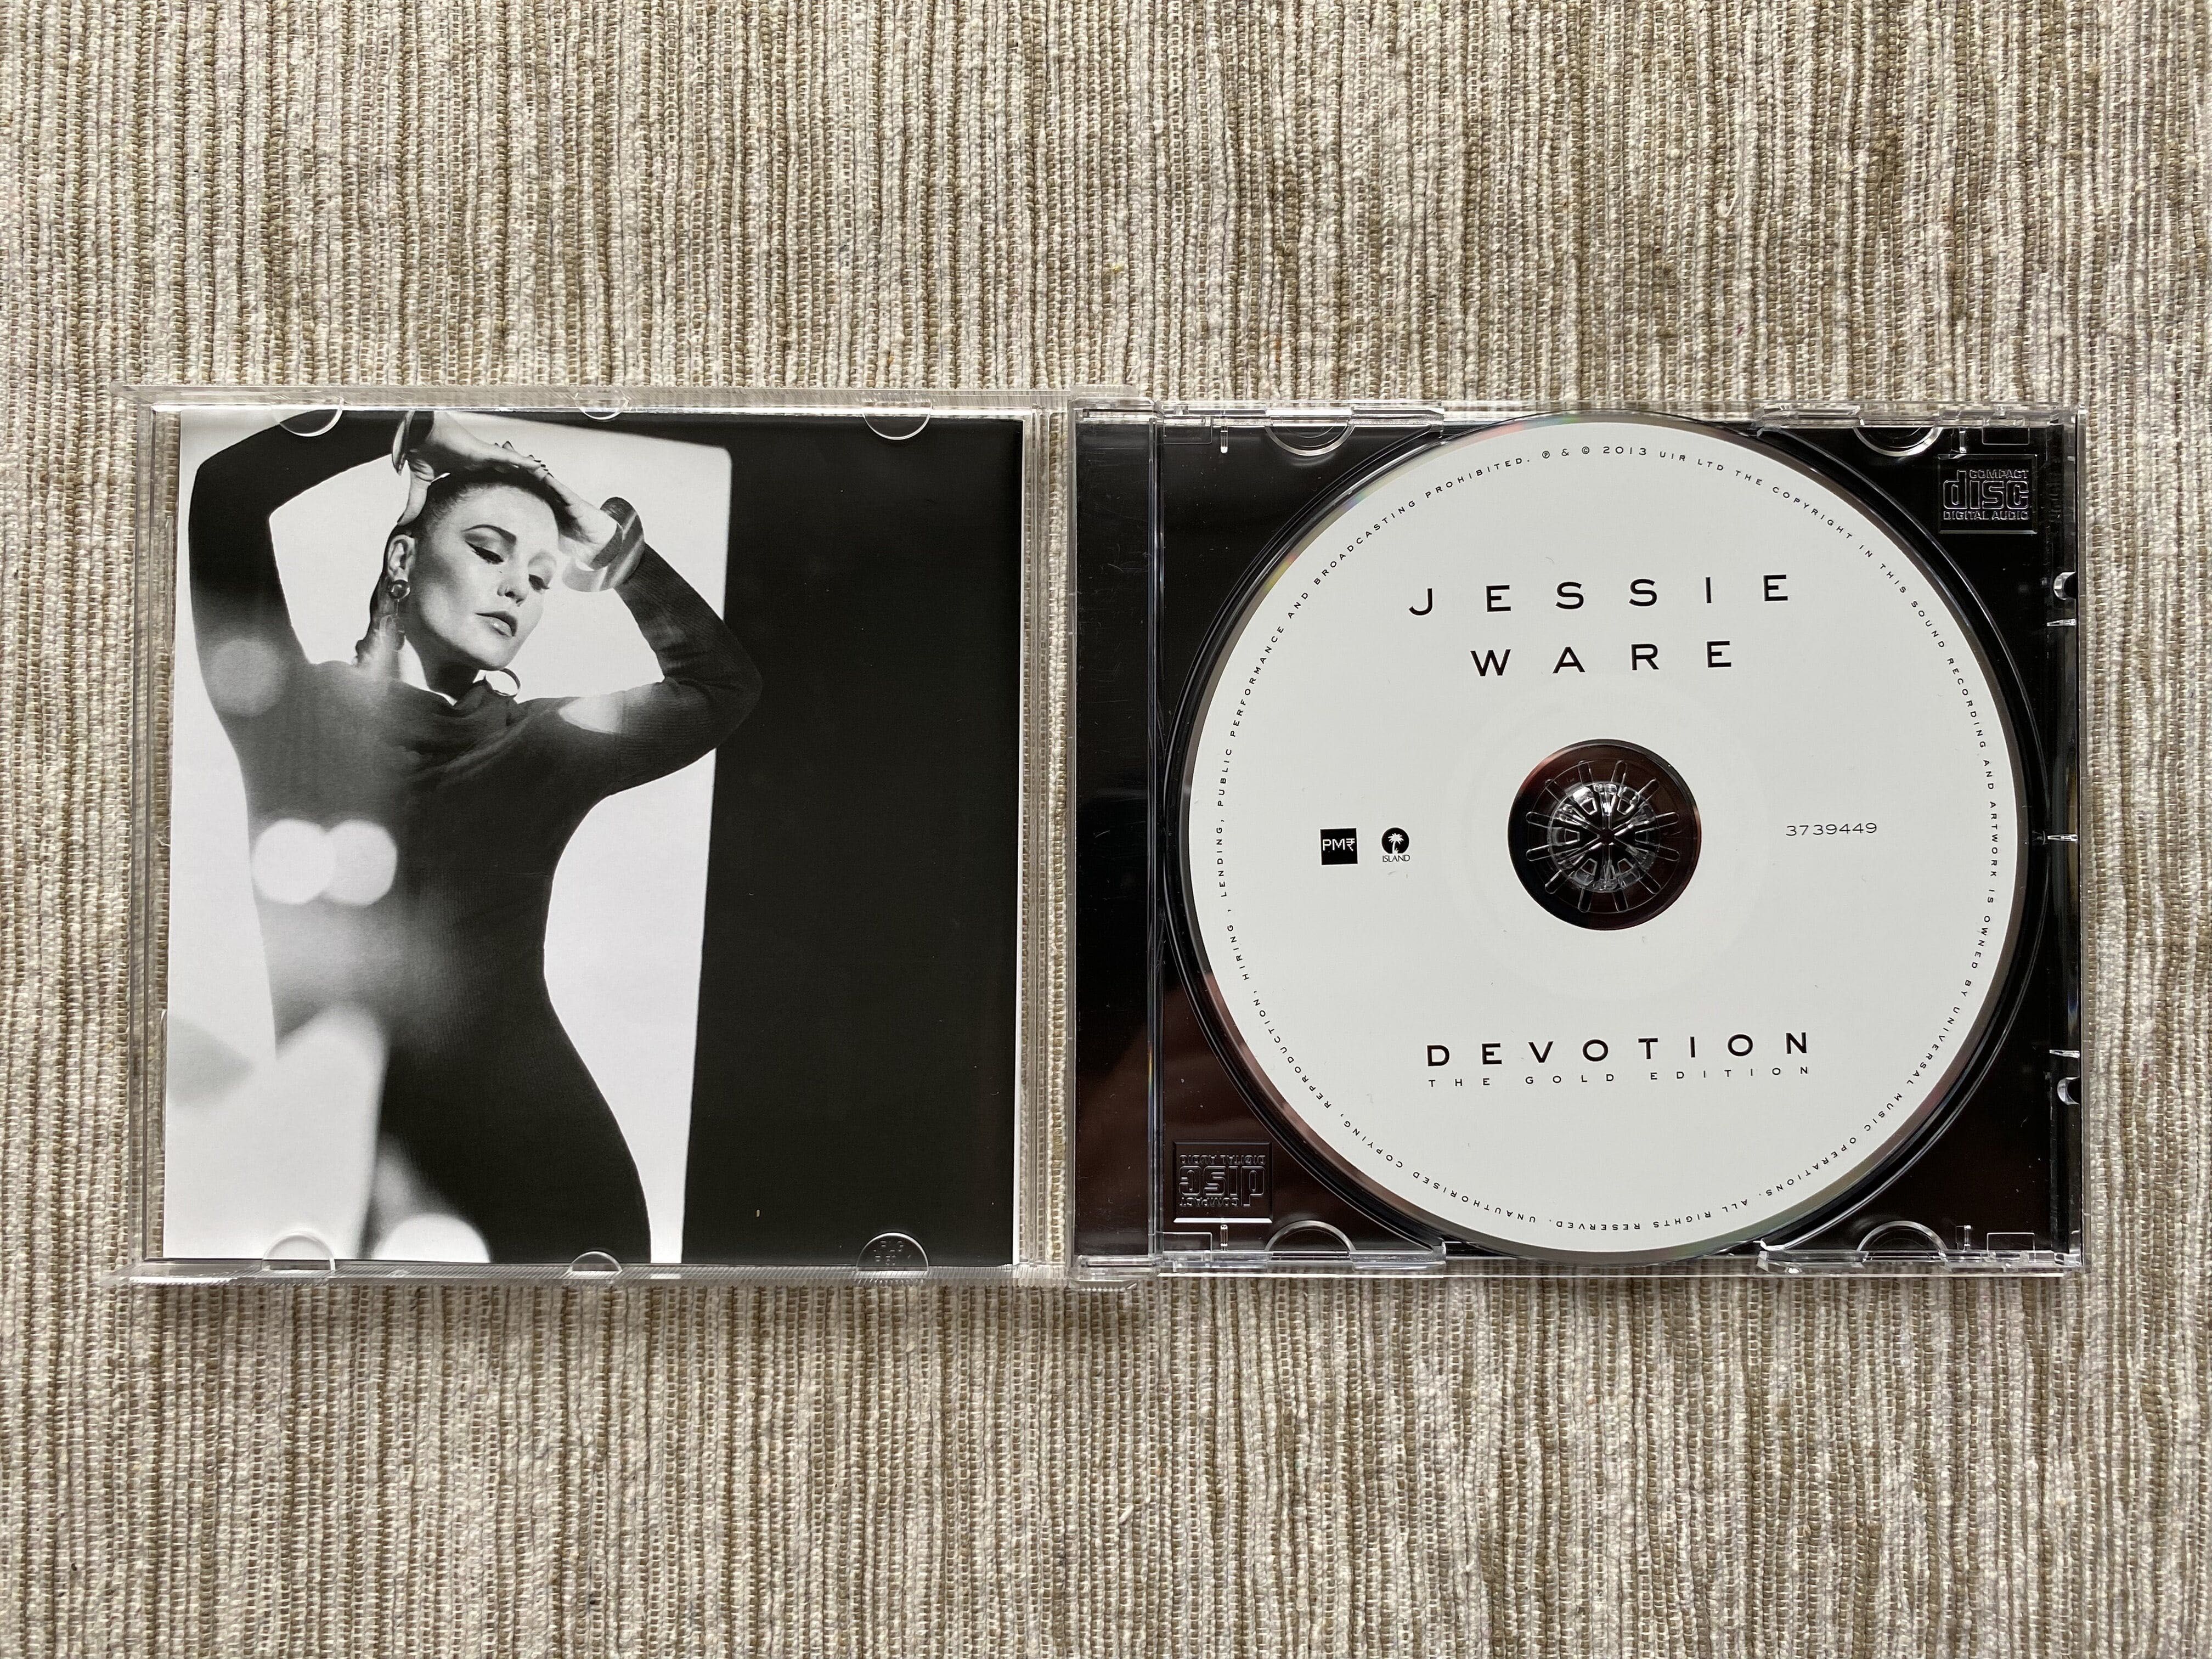 Jessie Ware - Devition The Golden Edition CD